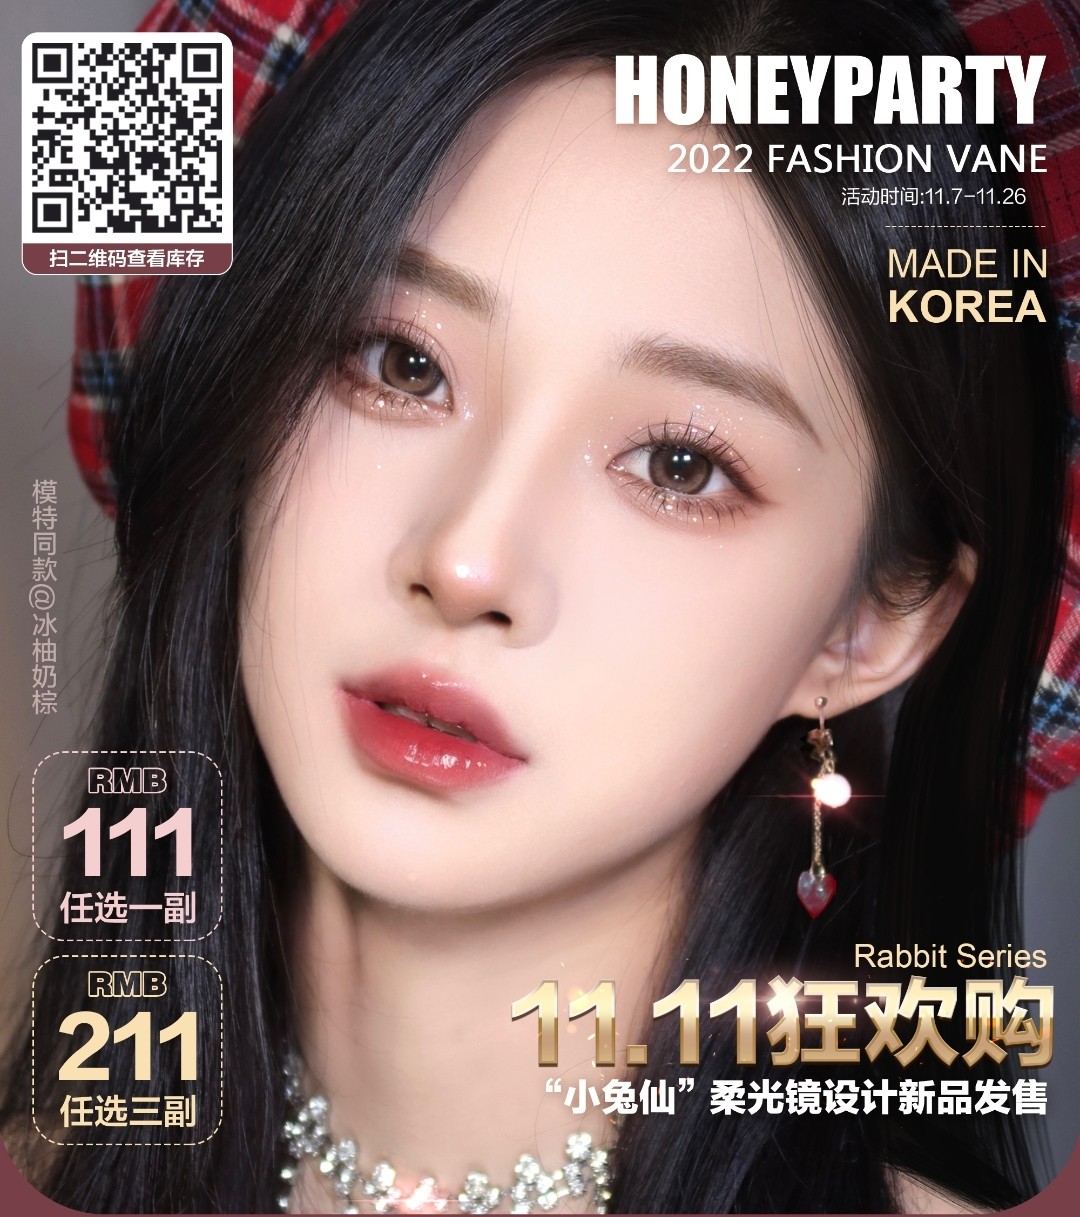 HoneyParty 11.11狂欢购 全色版集体美貌加持